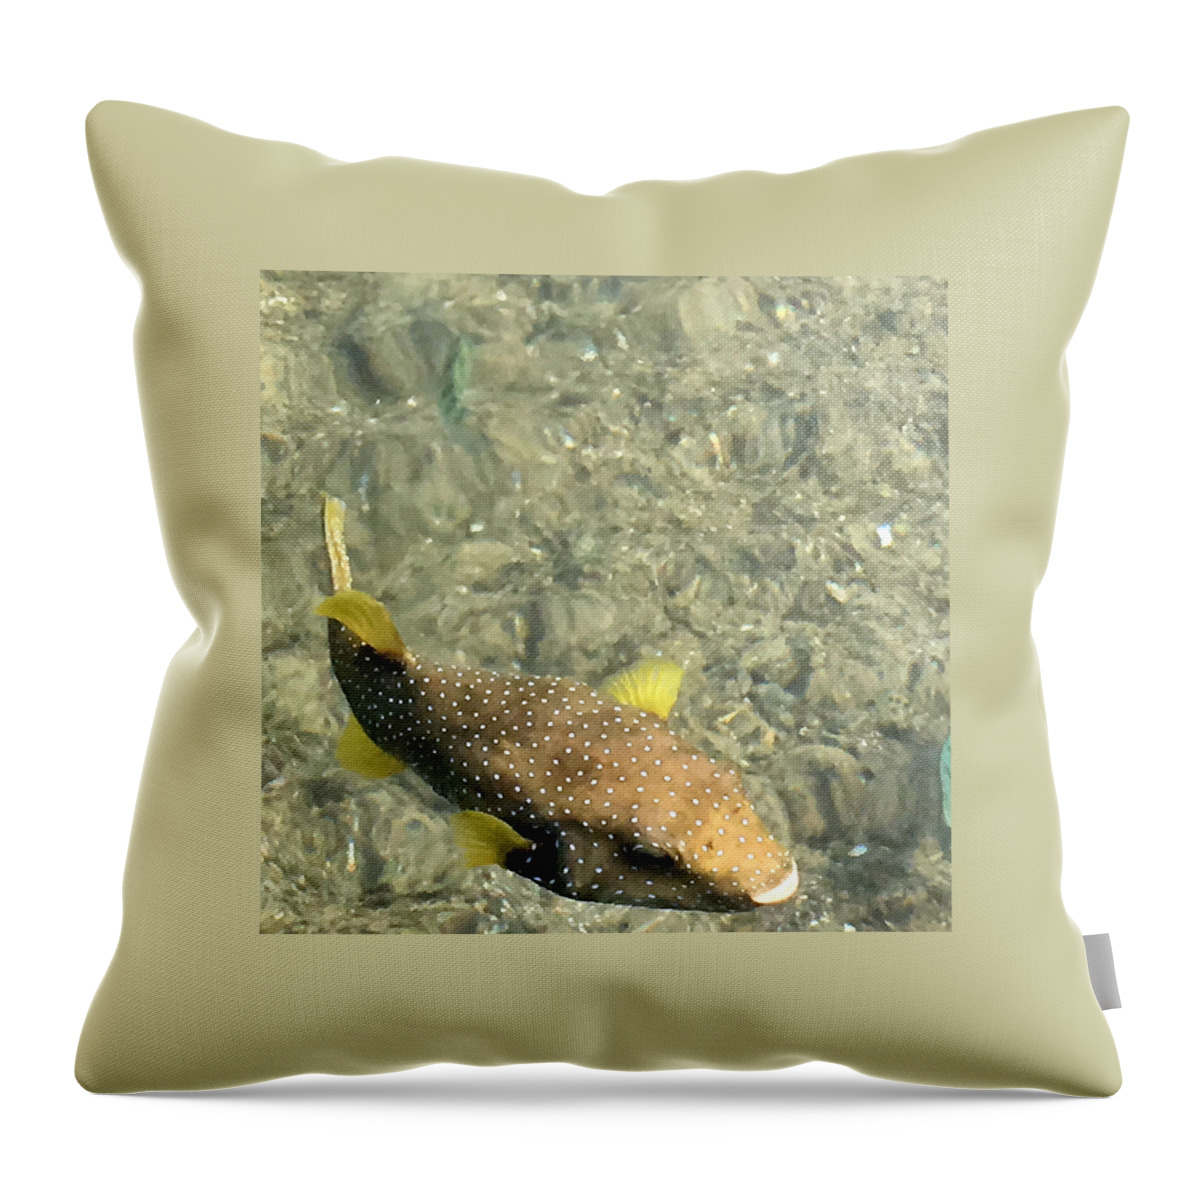 Fish Throw Pillow featuring the photograph Box Fish - 3 by Karen Nicholson